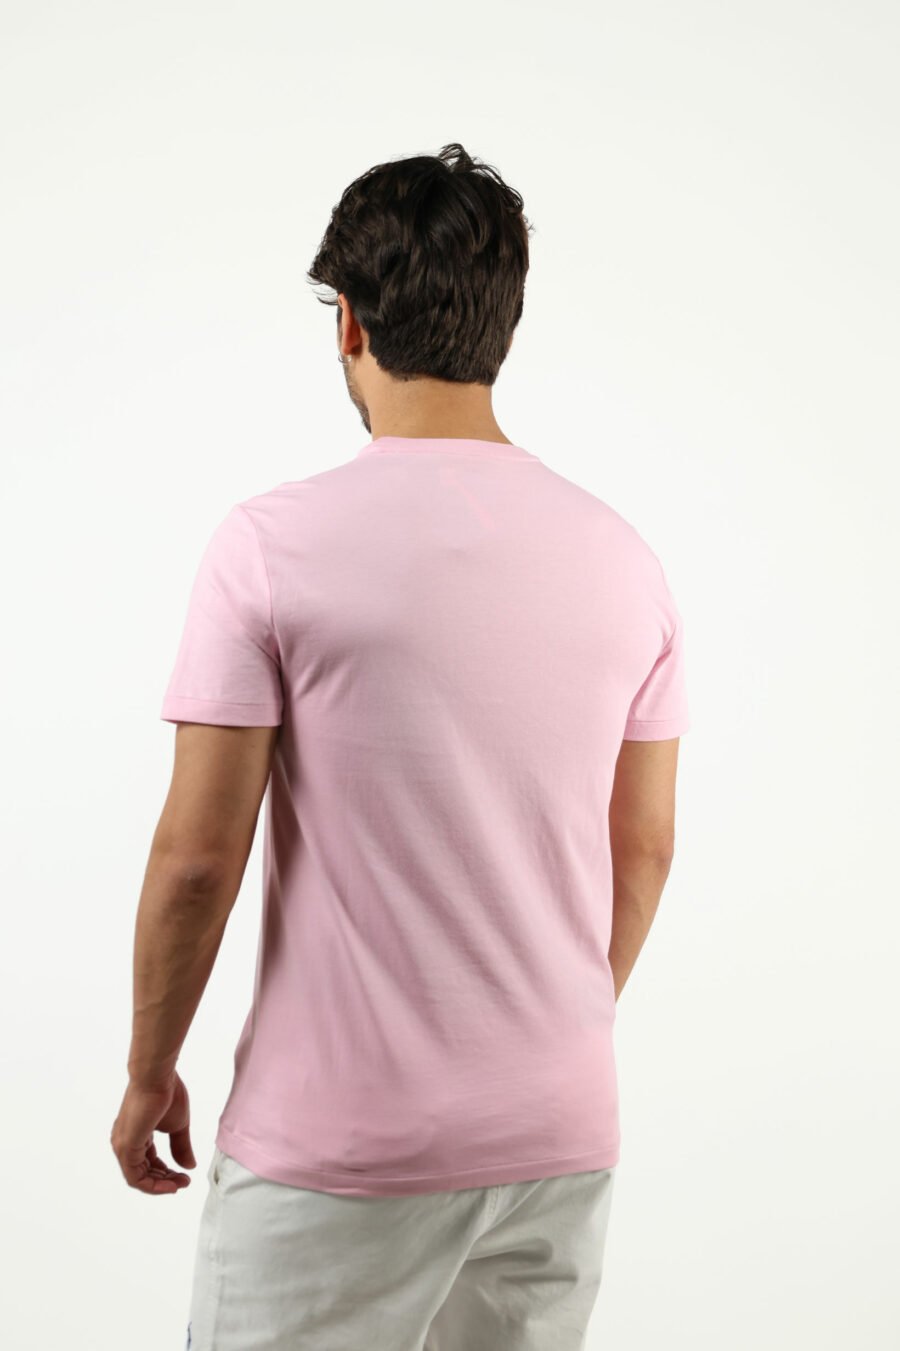 Camiseta rosa con minilogo "polo" verde - number14058